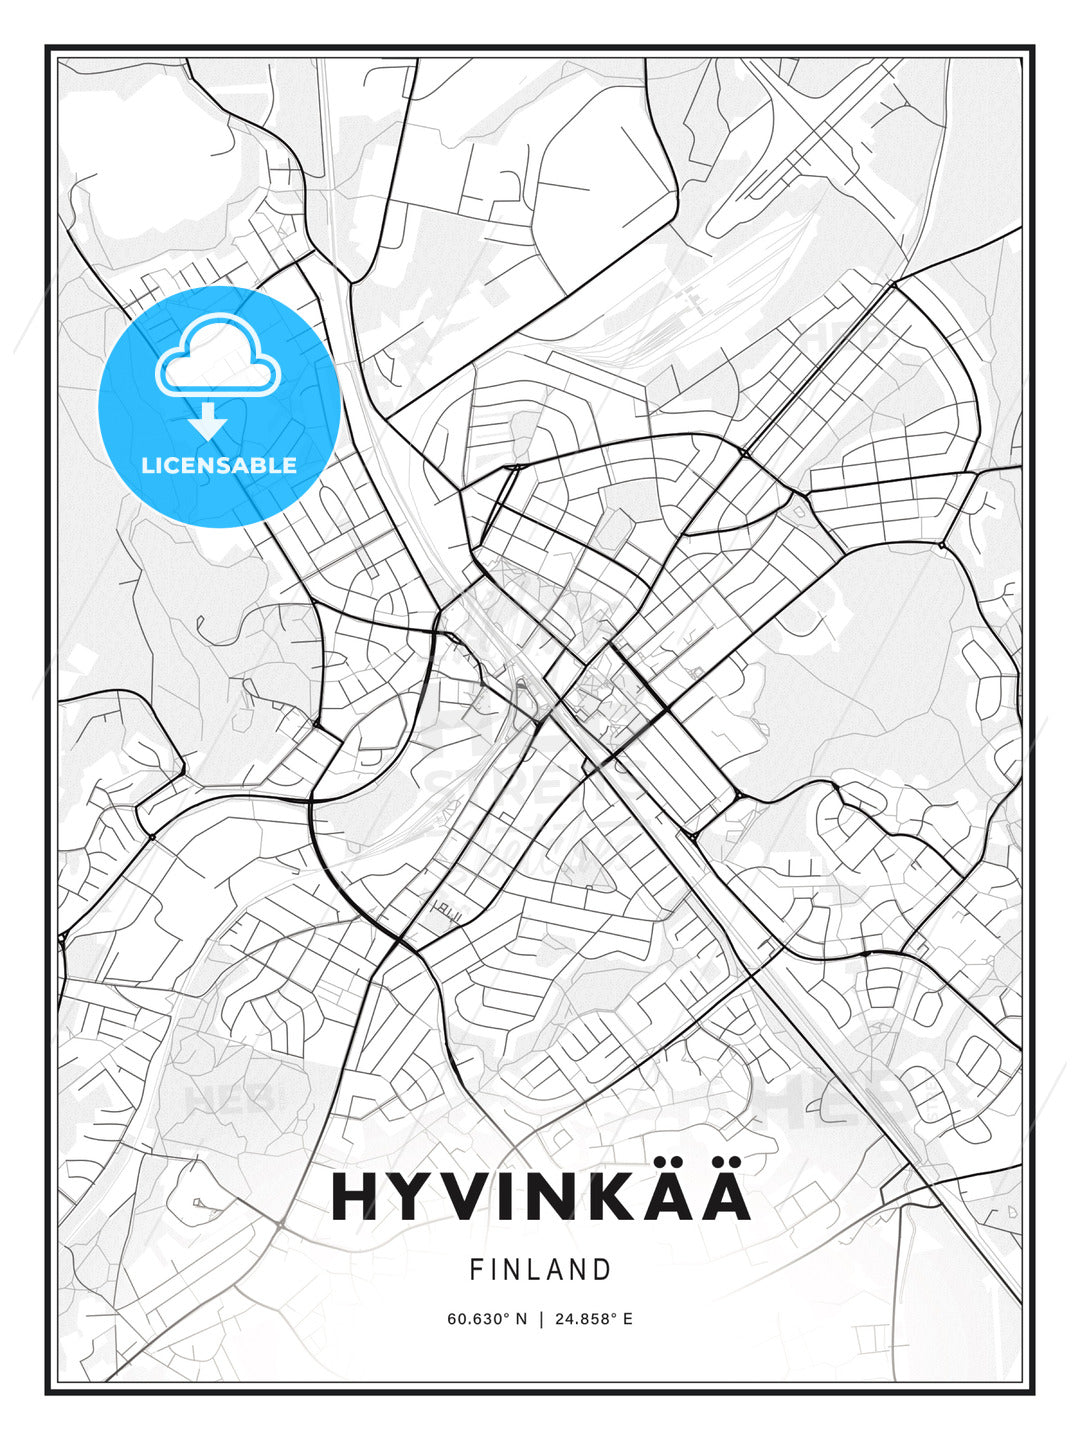 Hyvinkää, Finland, Modern Print Template in Various Formats - HEBSTREITS Sketches